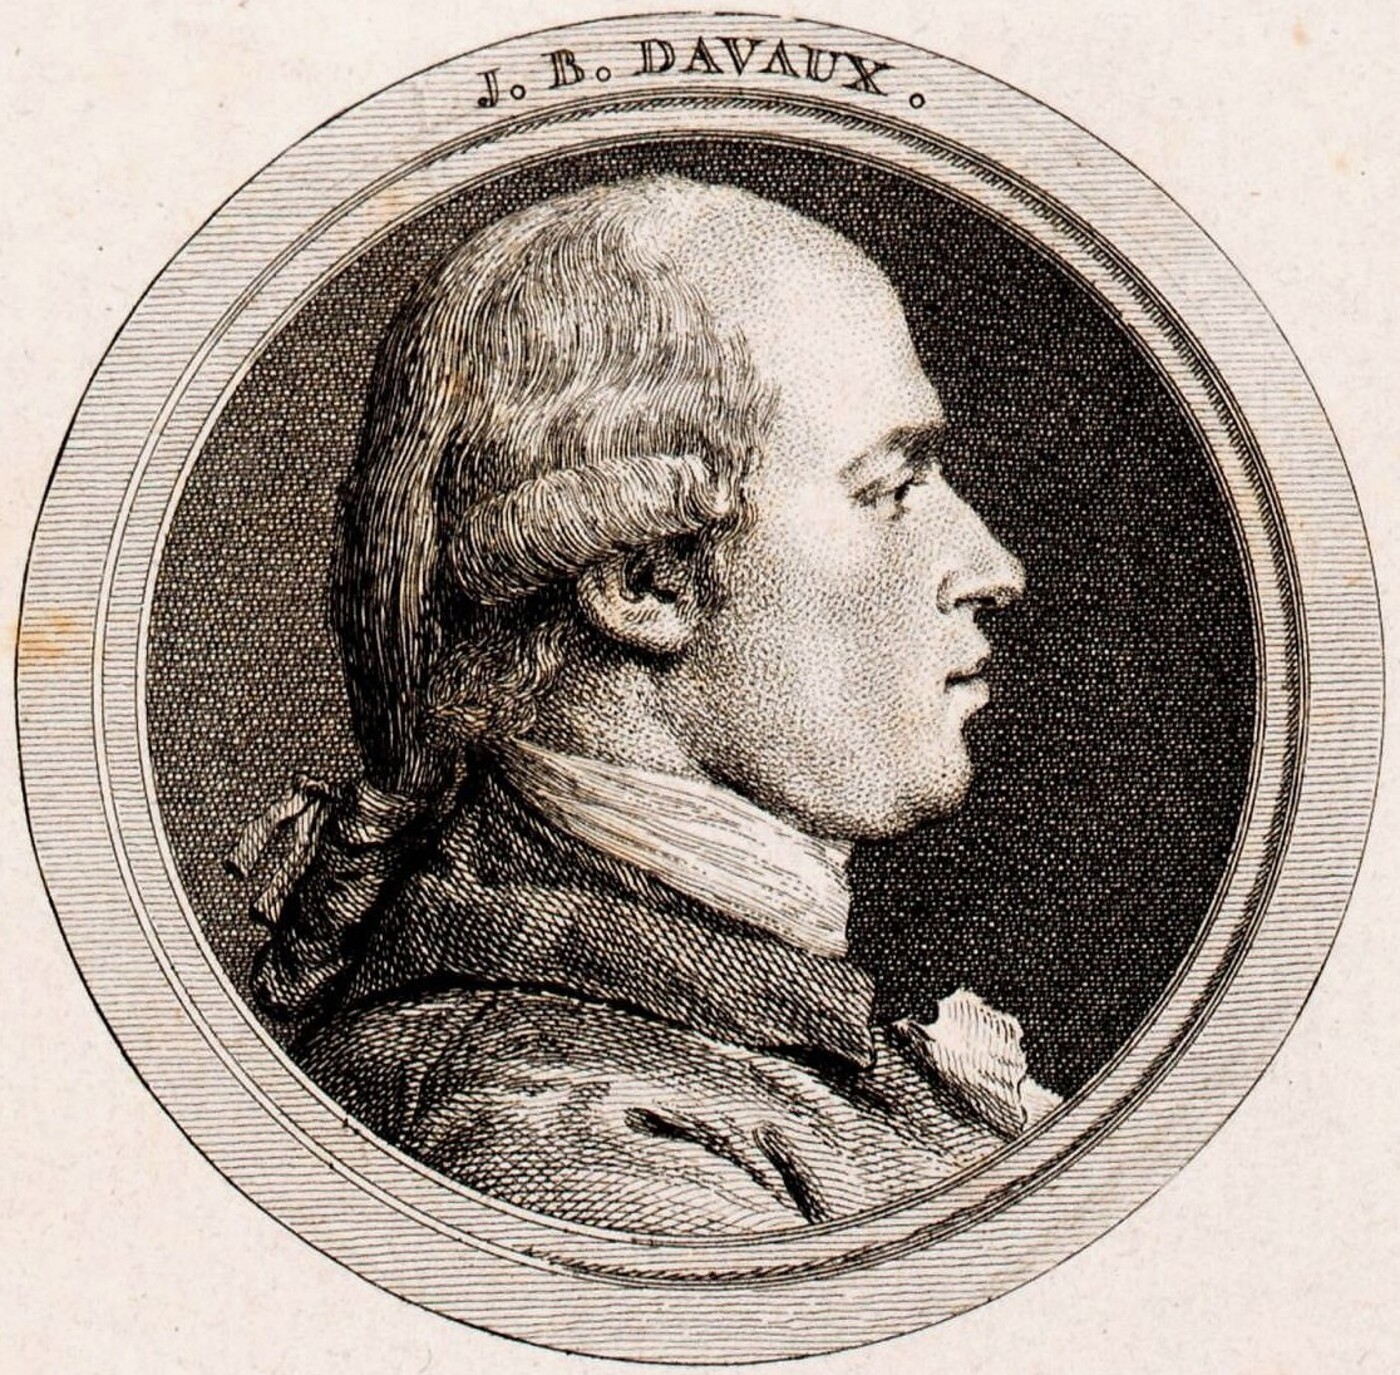 Jean-Baptiste Davaux